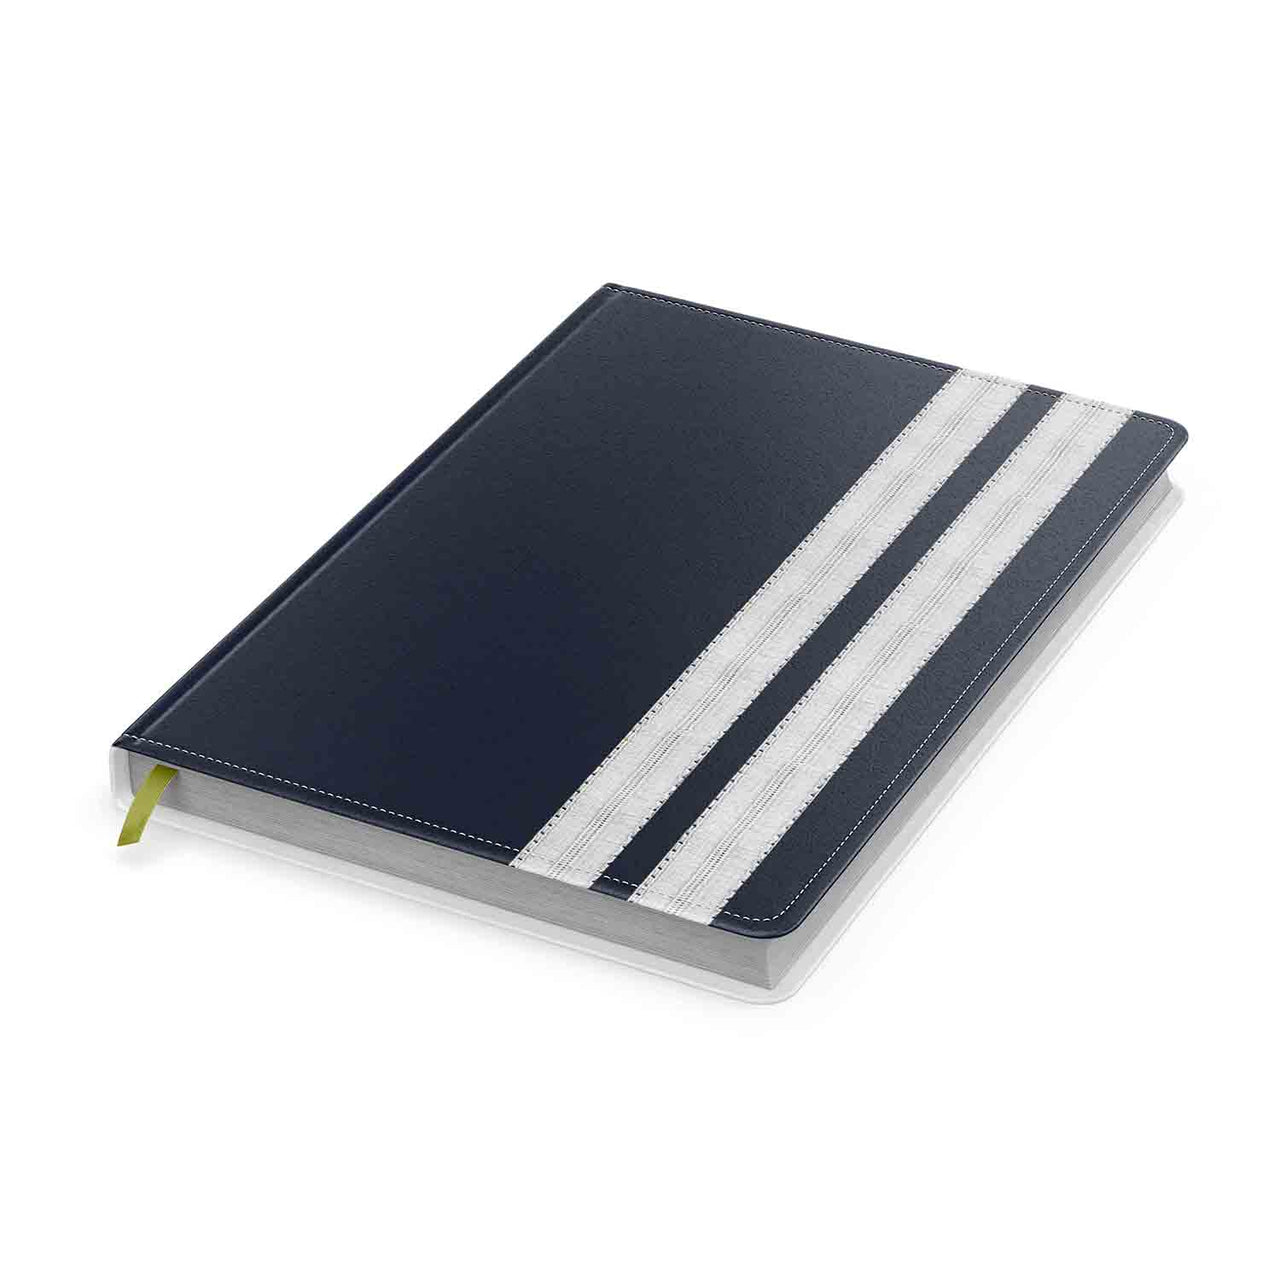 Special "SILVER" Pilot Epaulettes (4,3,2 Lines) Designed Notebooks